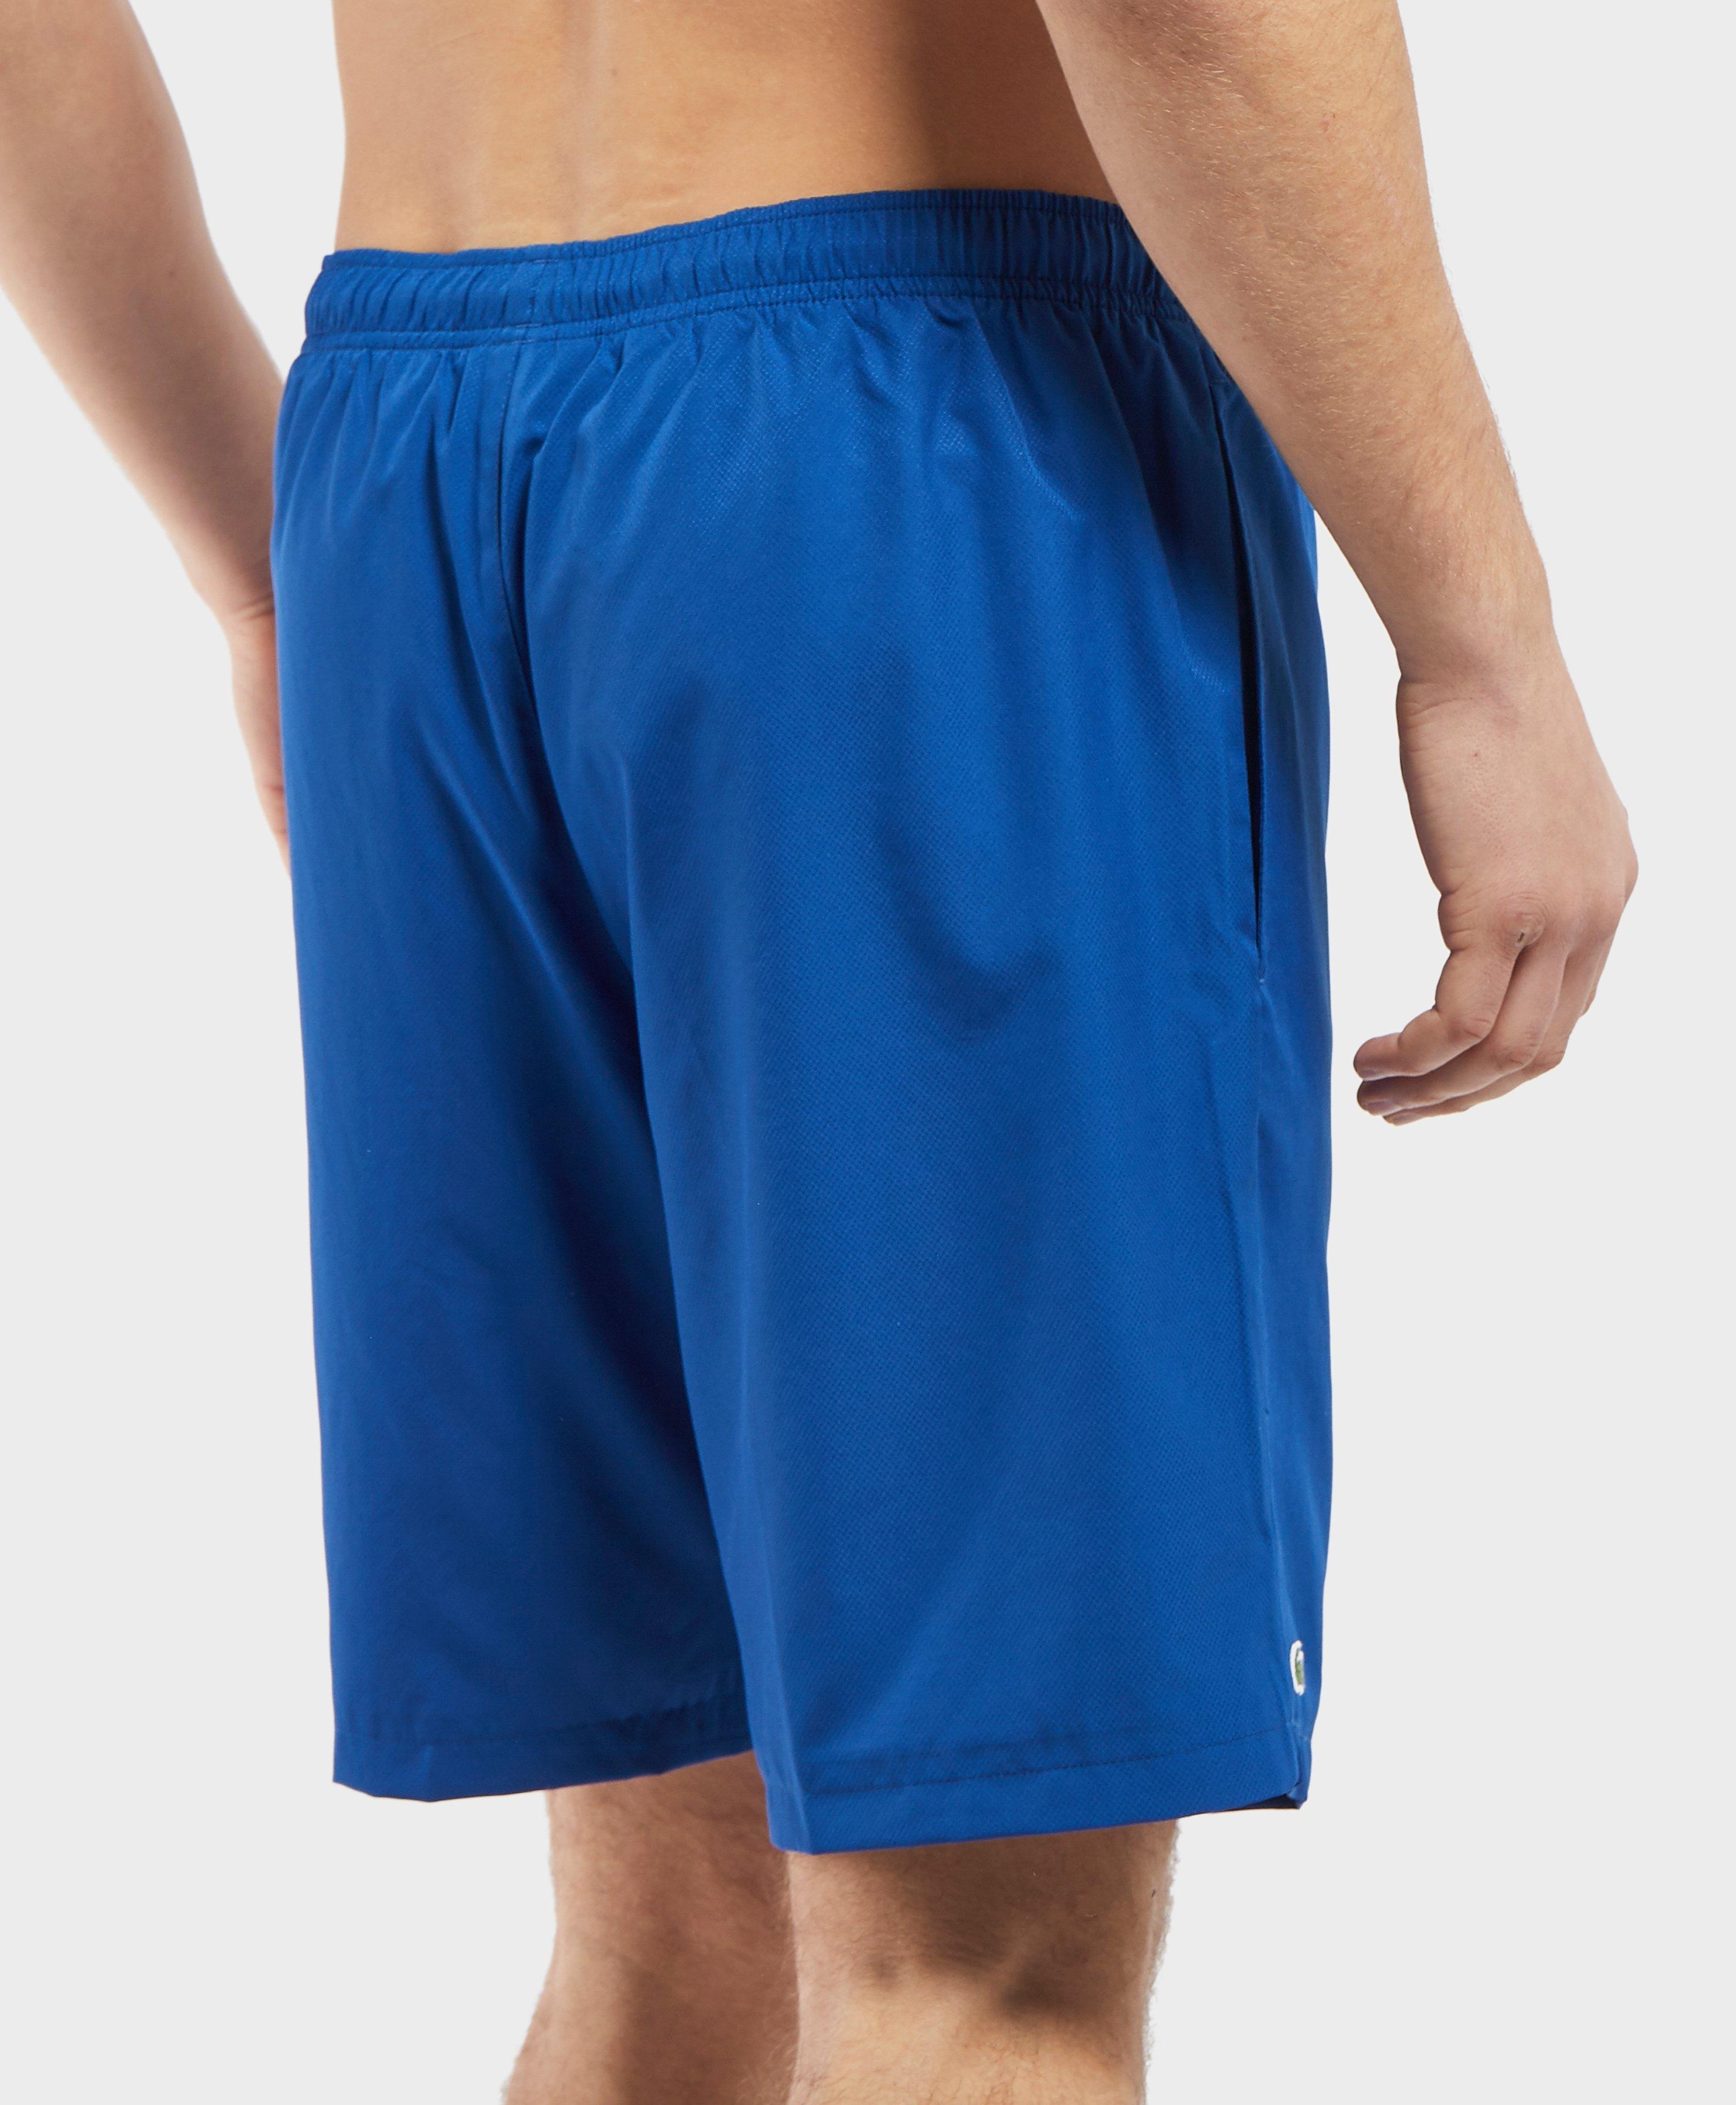 Lyst - Lacoste Quartier Swim Shorts in Blue for Men